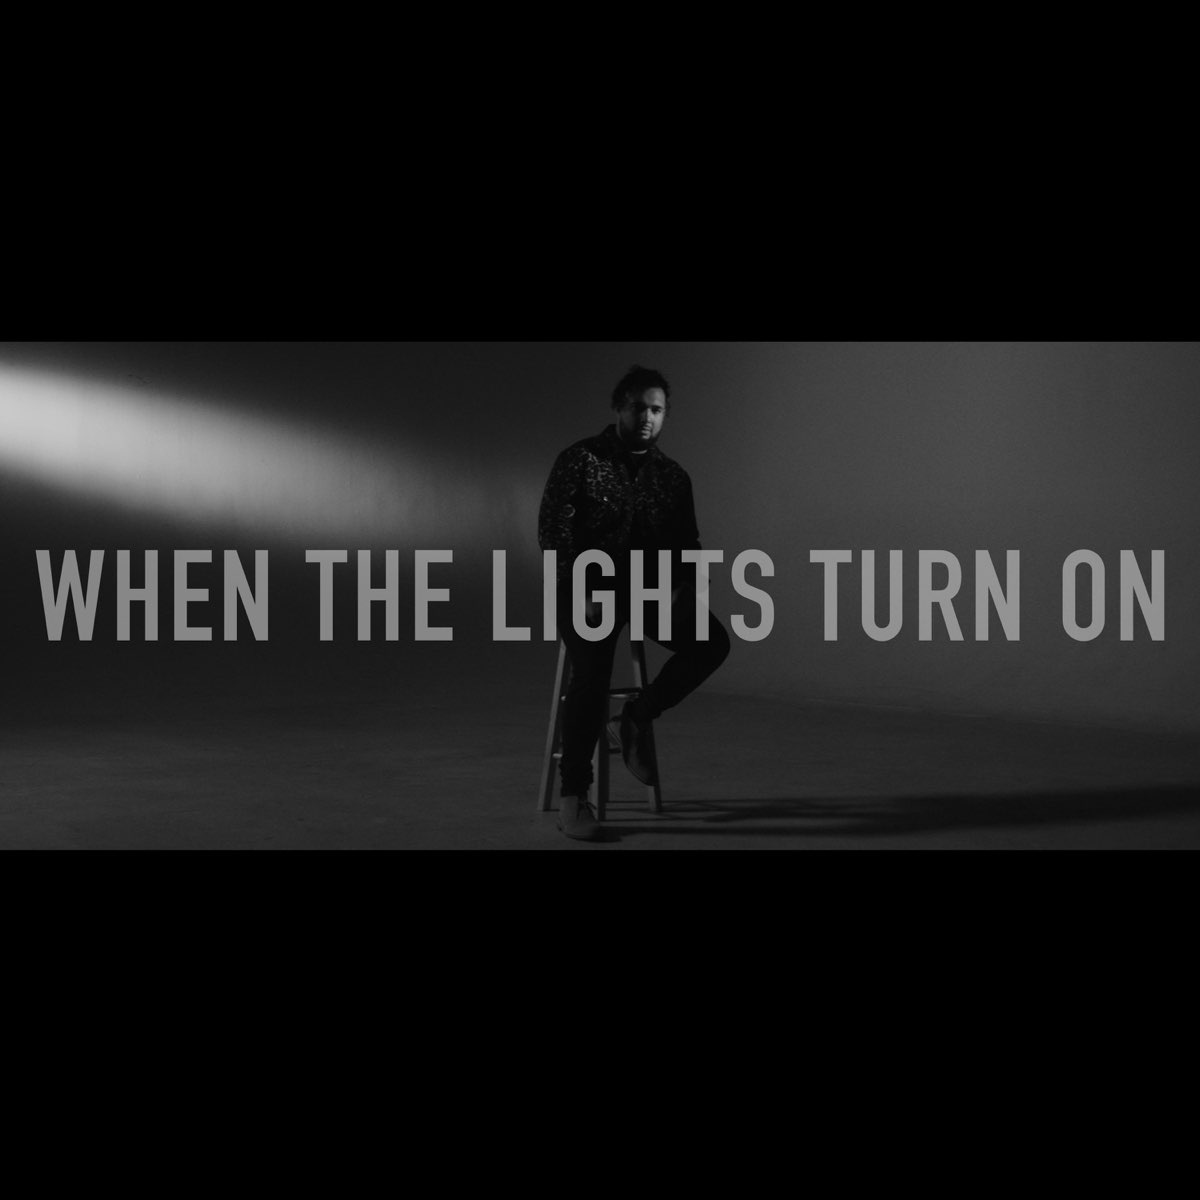 Turn all the Lights on. Turn of the Light песня певец.